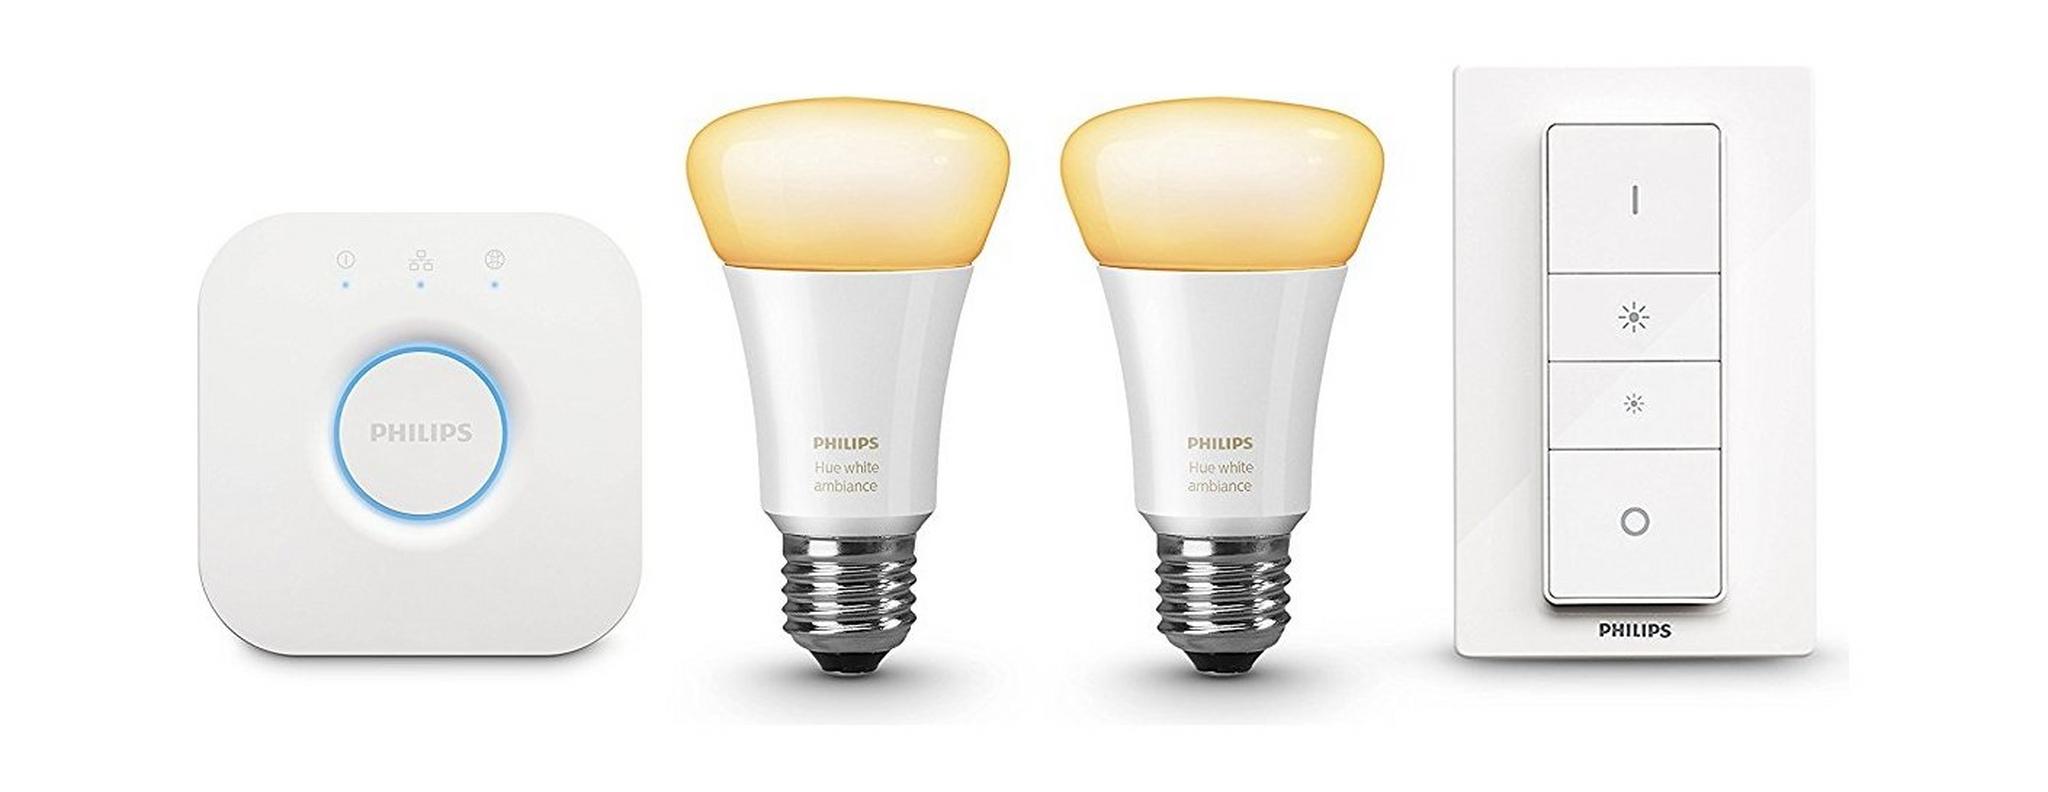 Philips Hue Ambiance 9.5 Watts LED Light Starter Kit - White